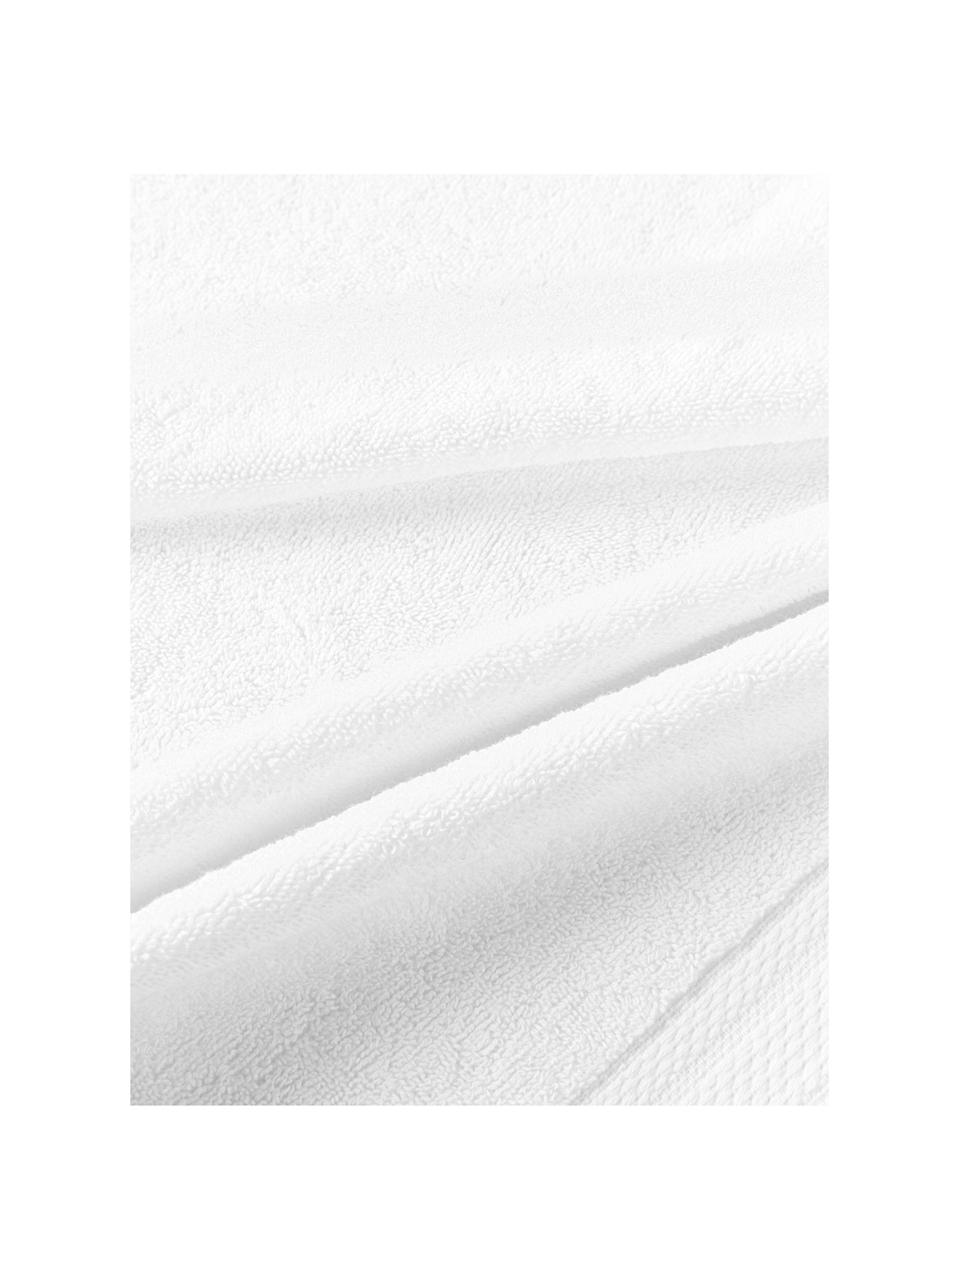 Set di asciugamani in cotone organico Premium, varie misure, 100% cotone organico certificato GOTS (da GCL International, GCL-300517).
Qualità pesante, 600 g/m², Bianco, Set di 4 (asciugamano e telo da bagno)